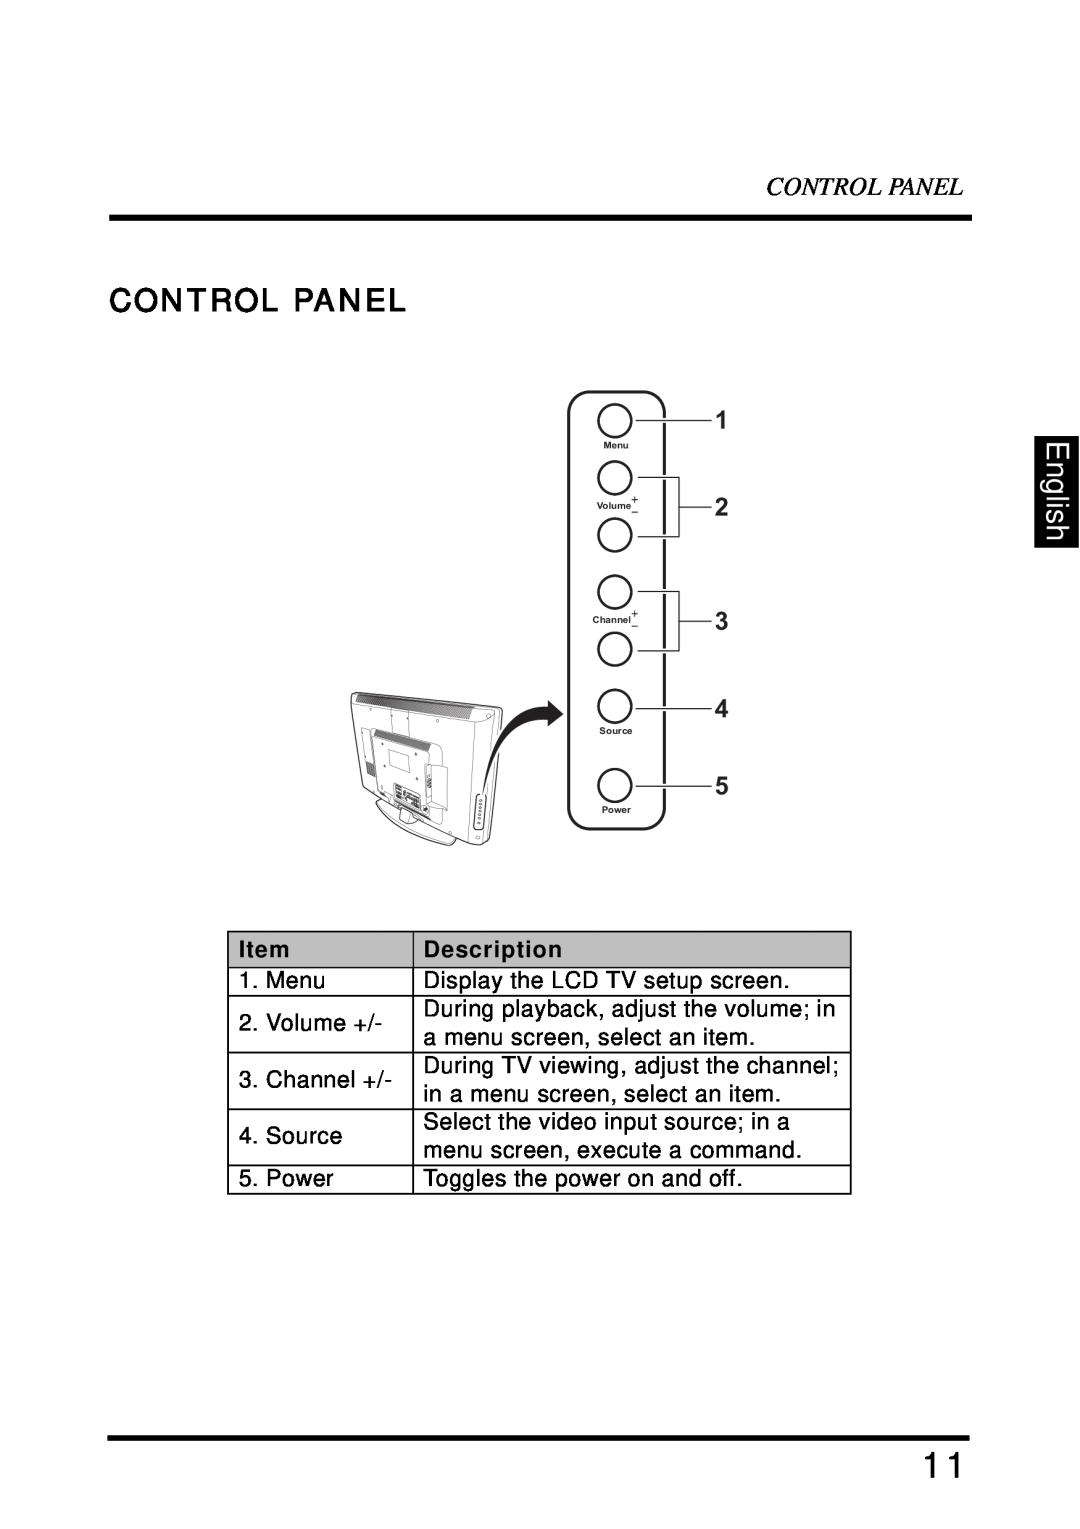 Westinghouse SK-32H640G user manual Control Panel, English, Description 